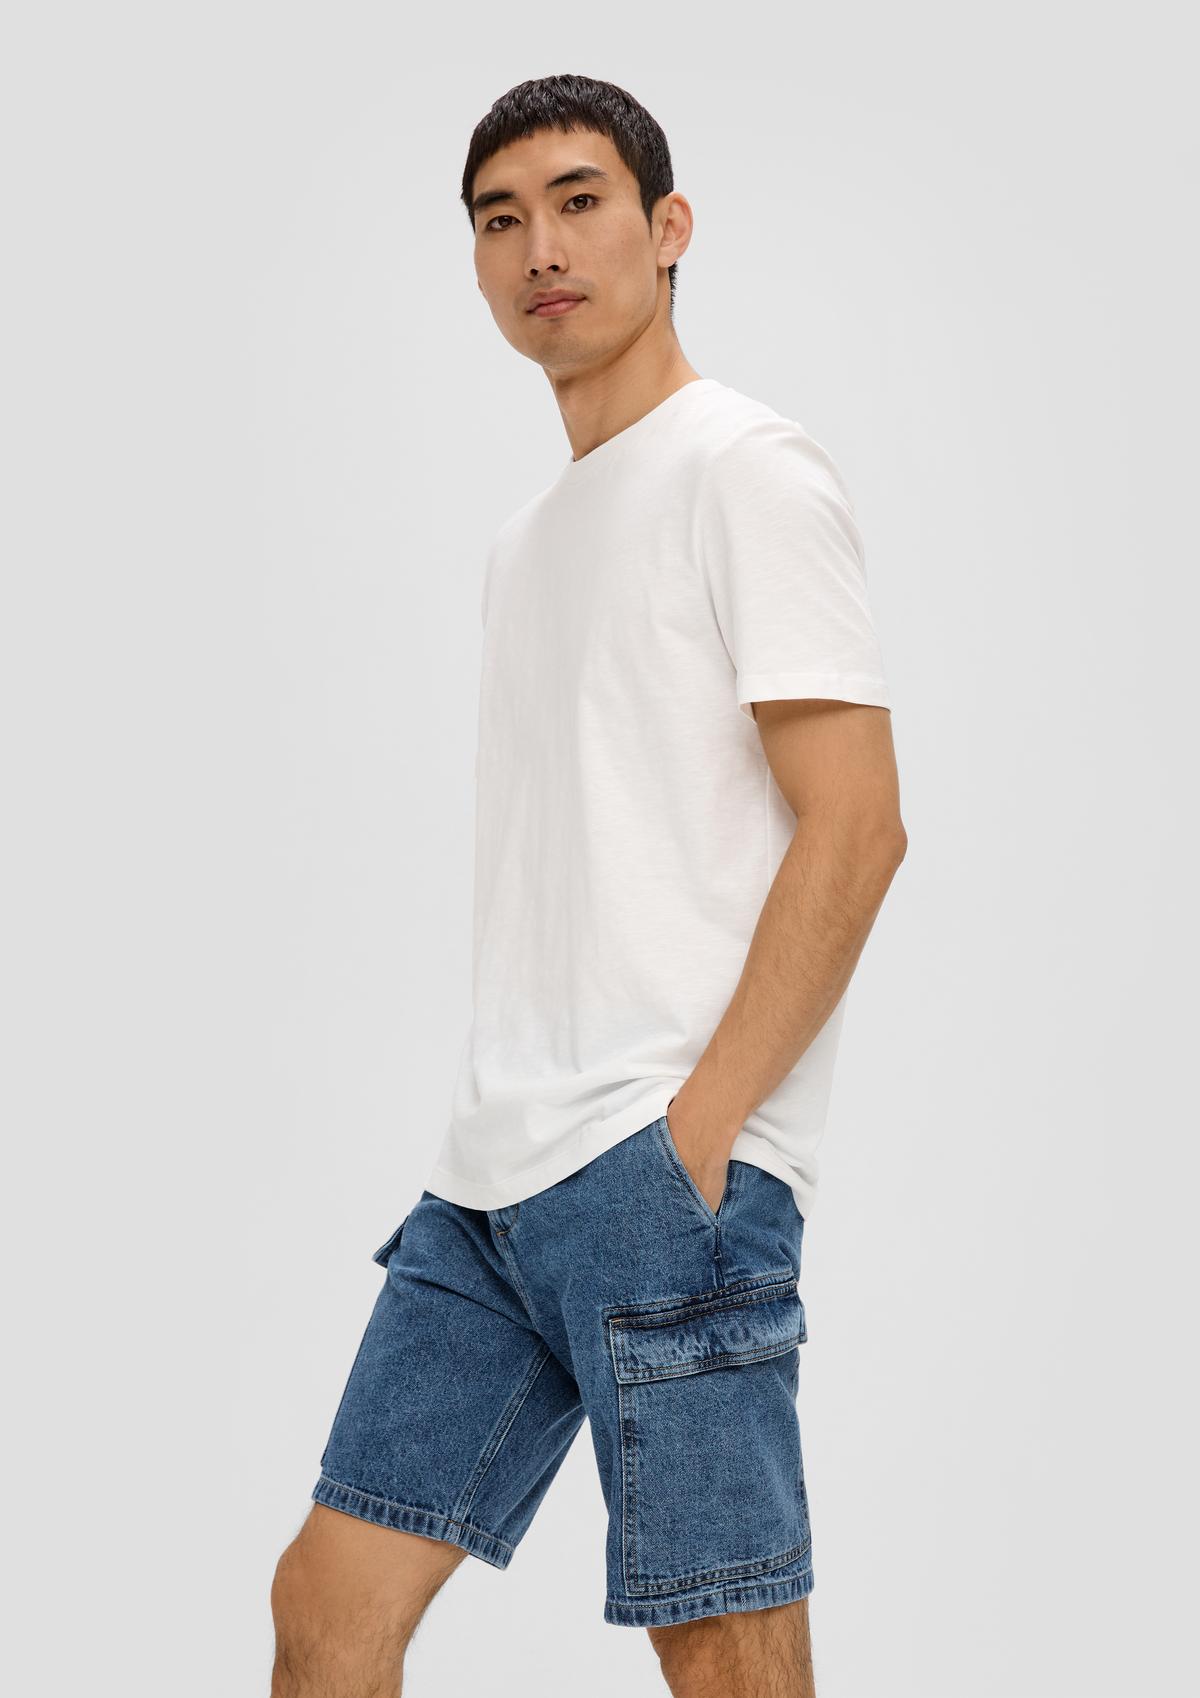 Jeans-Shorts / High Rise / Cargo-Taschen